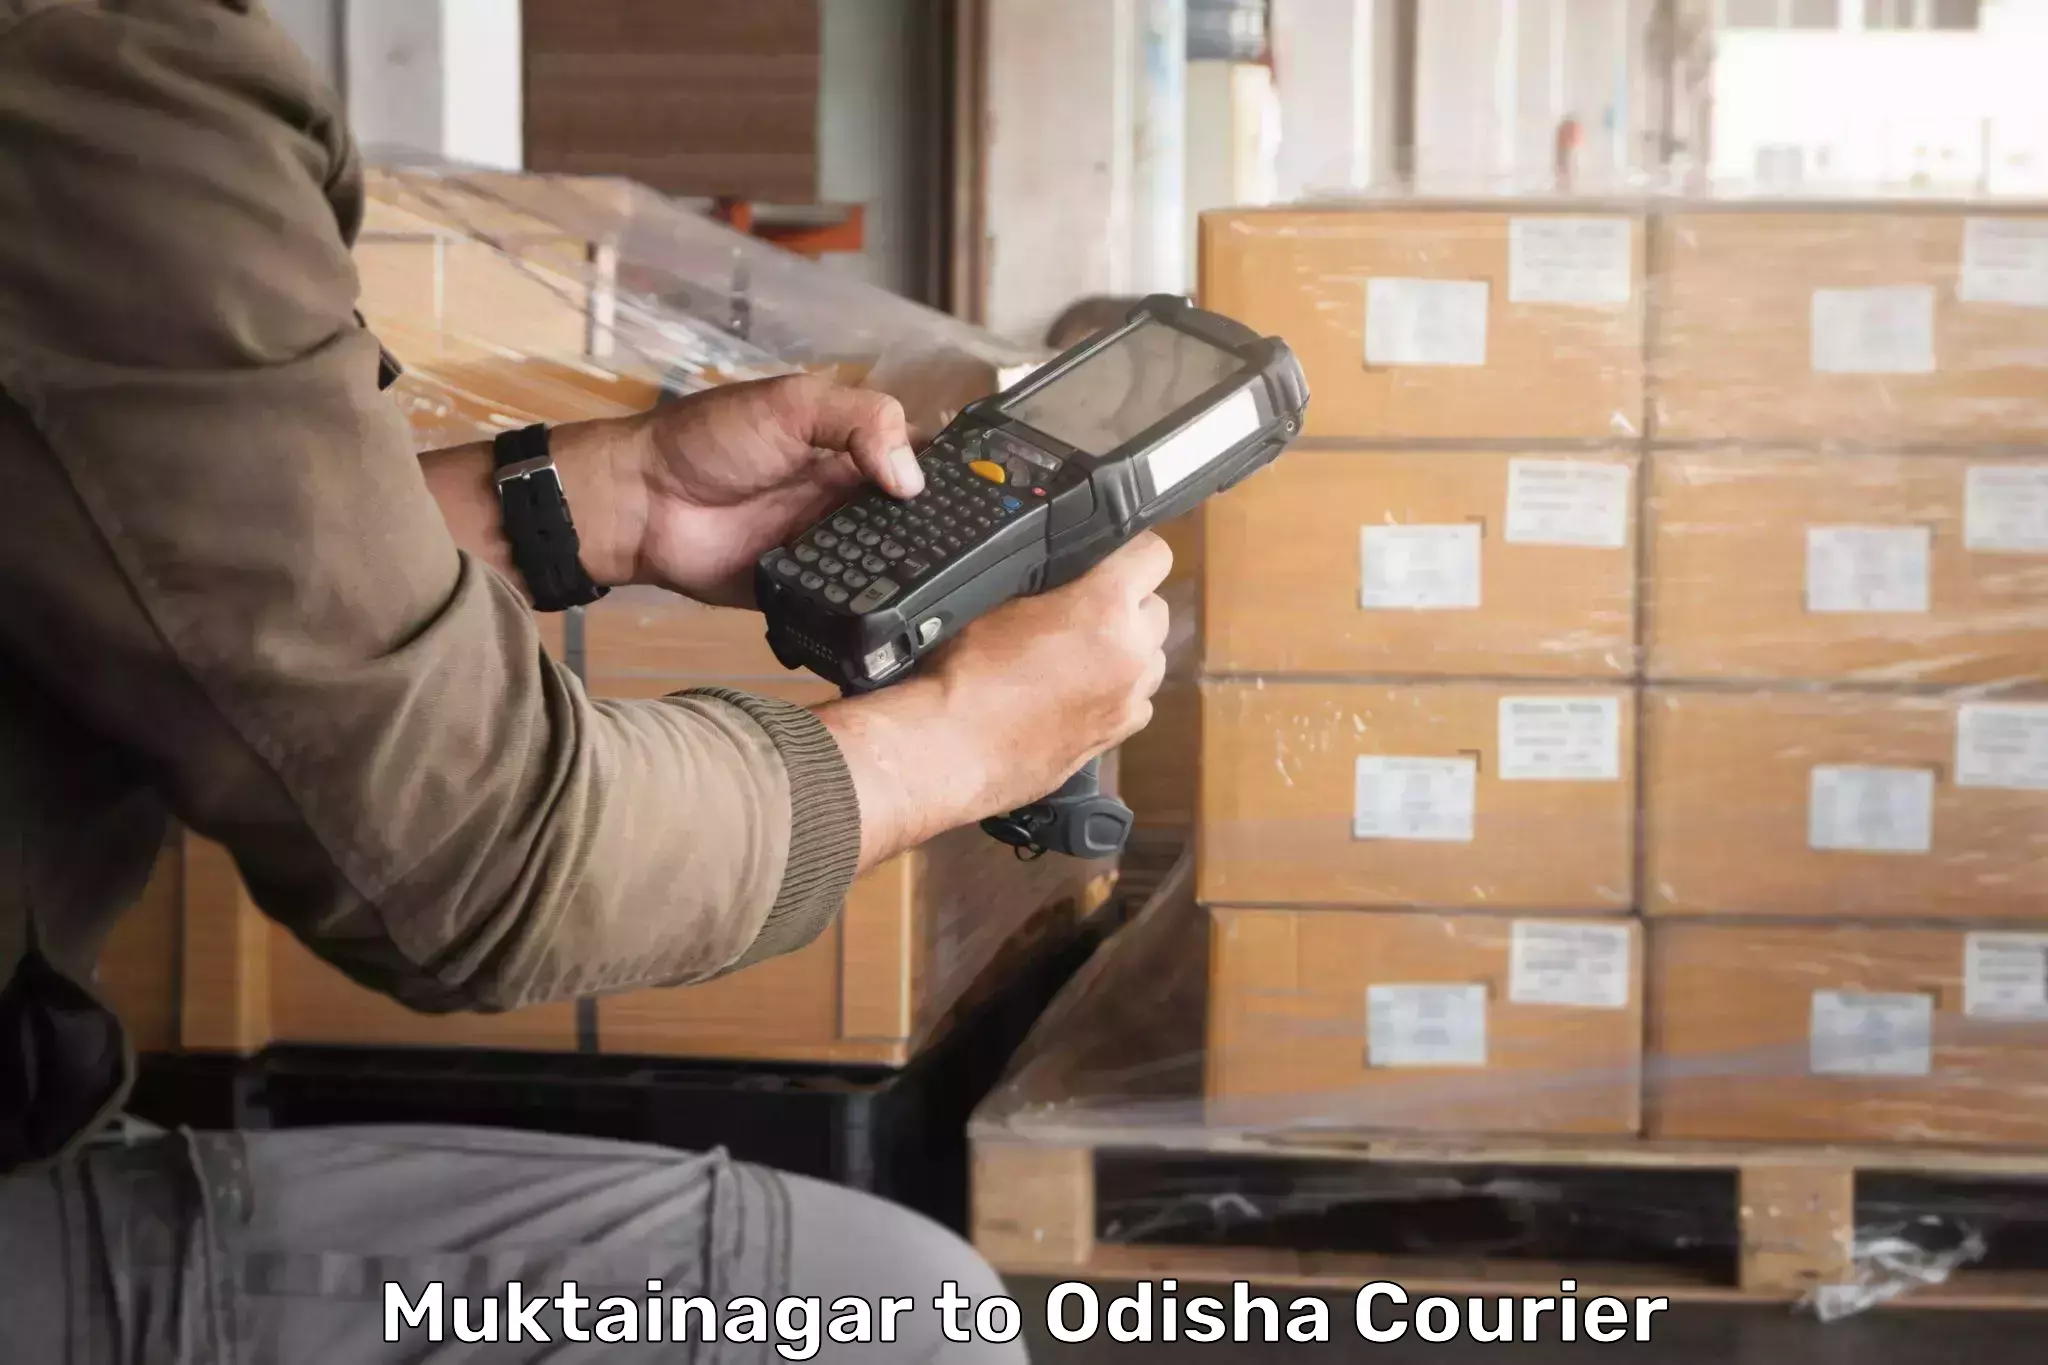 Courier service comparison Muktainagar to Bhuban